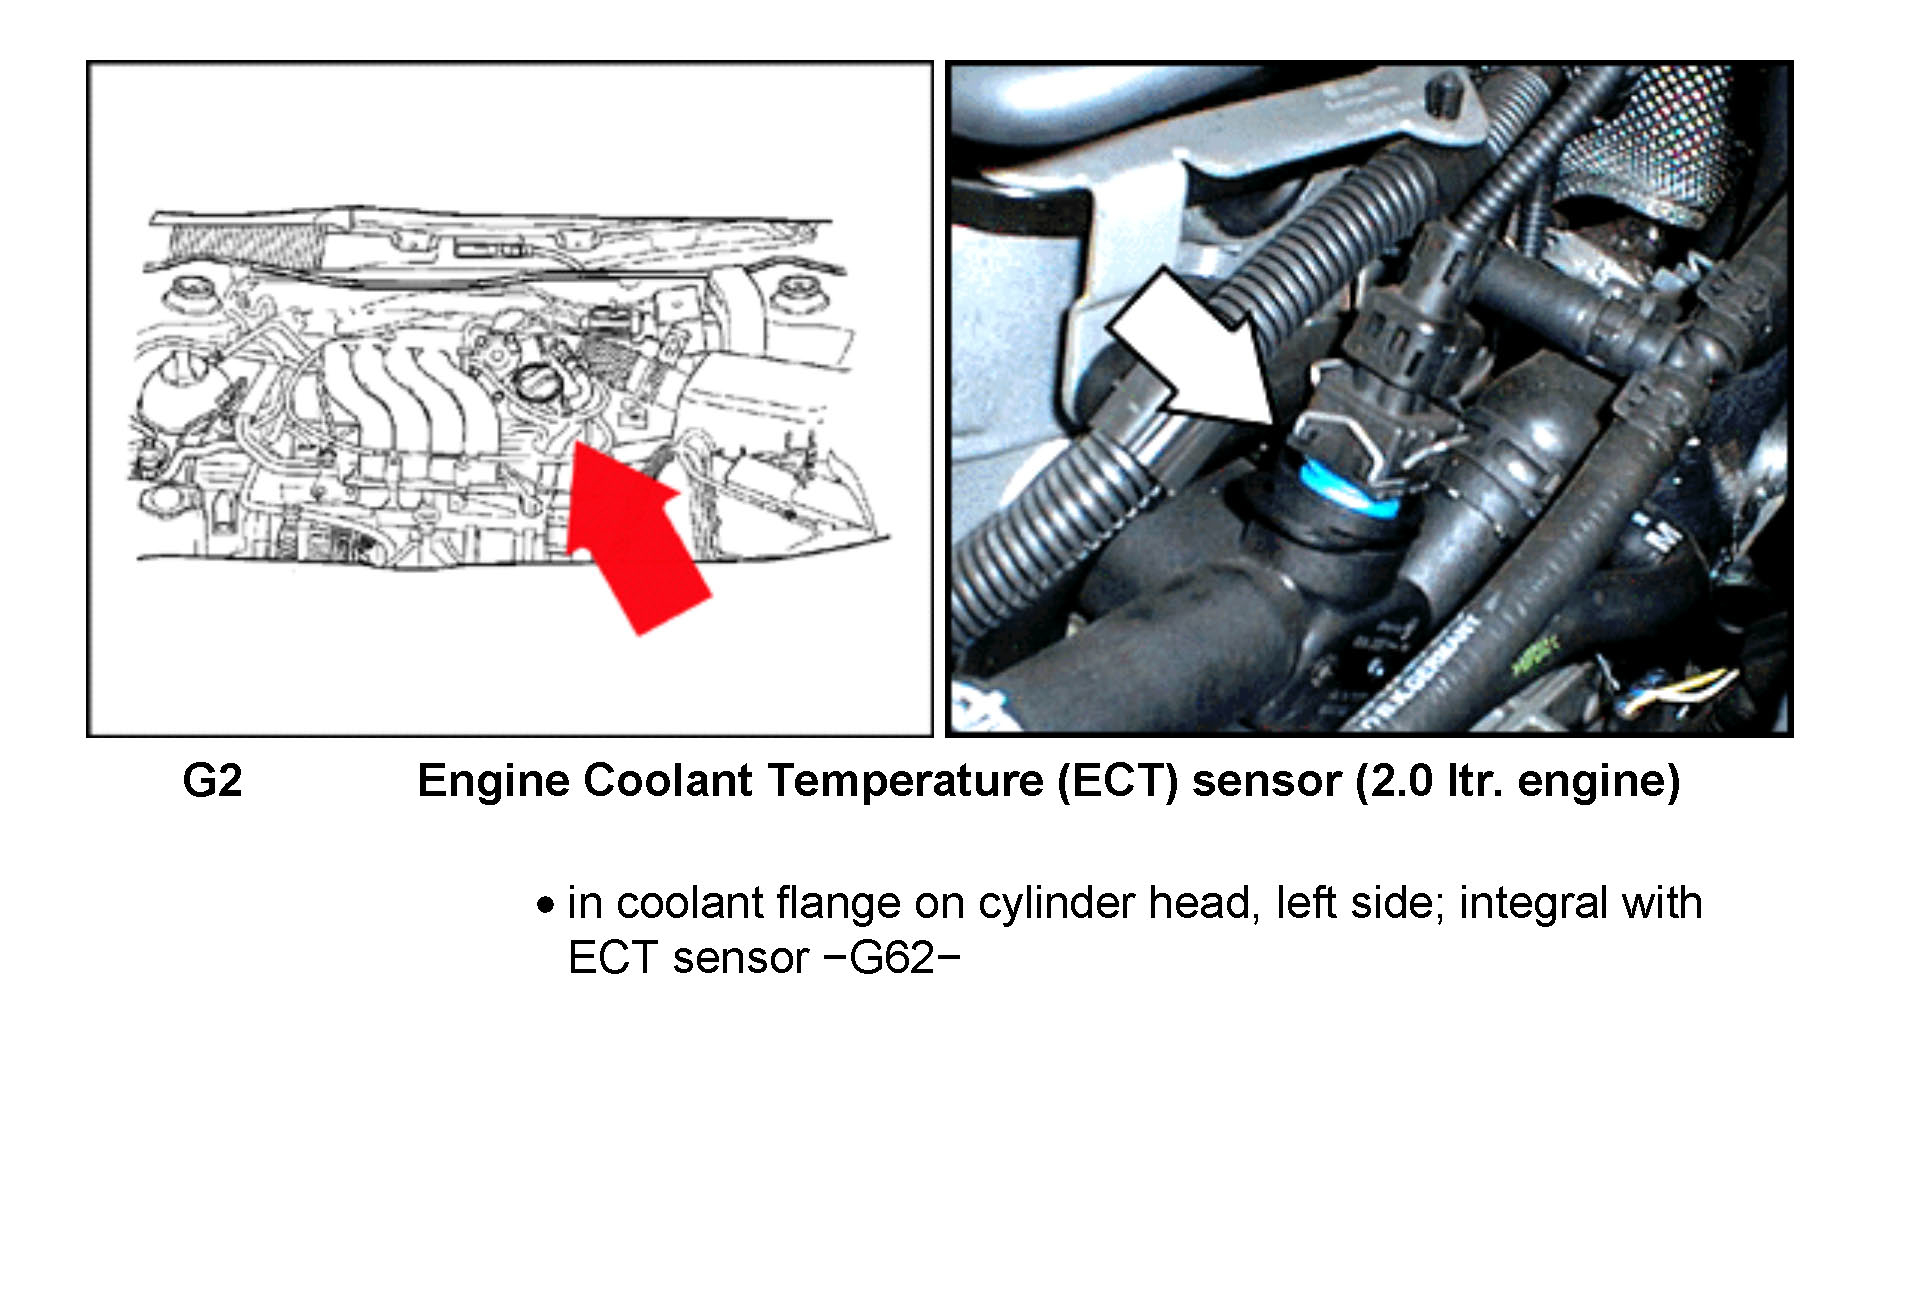 2002 ford f150 4.6 coolant temp sensor location